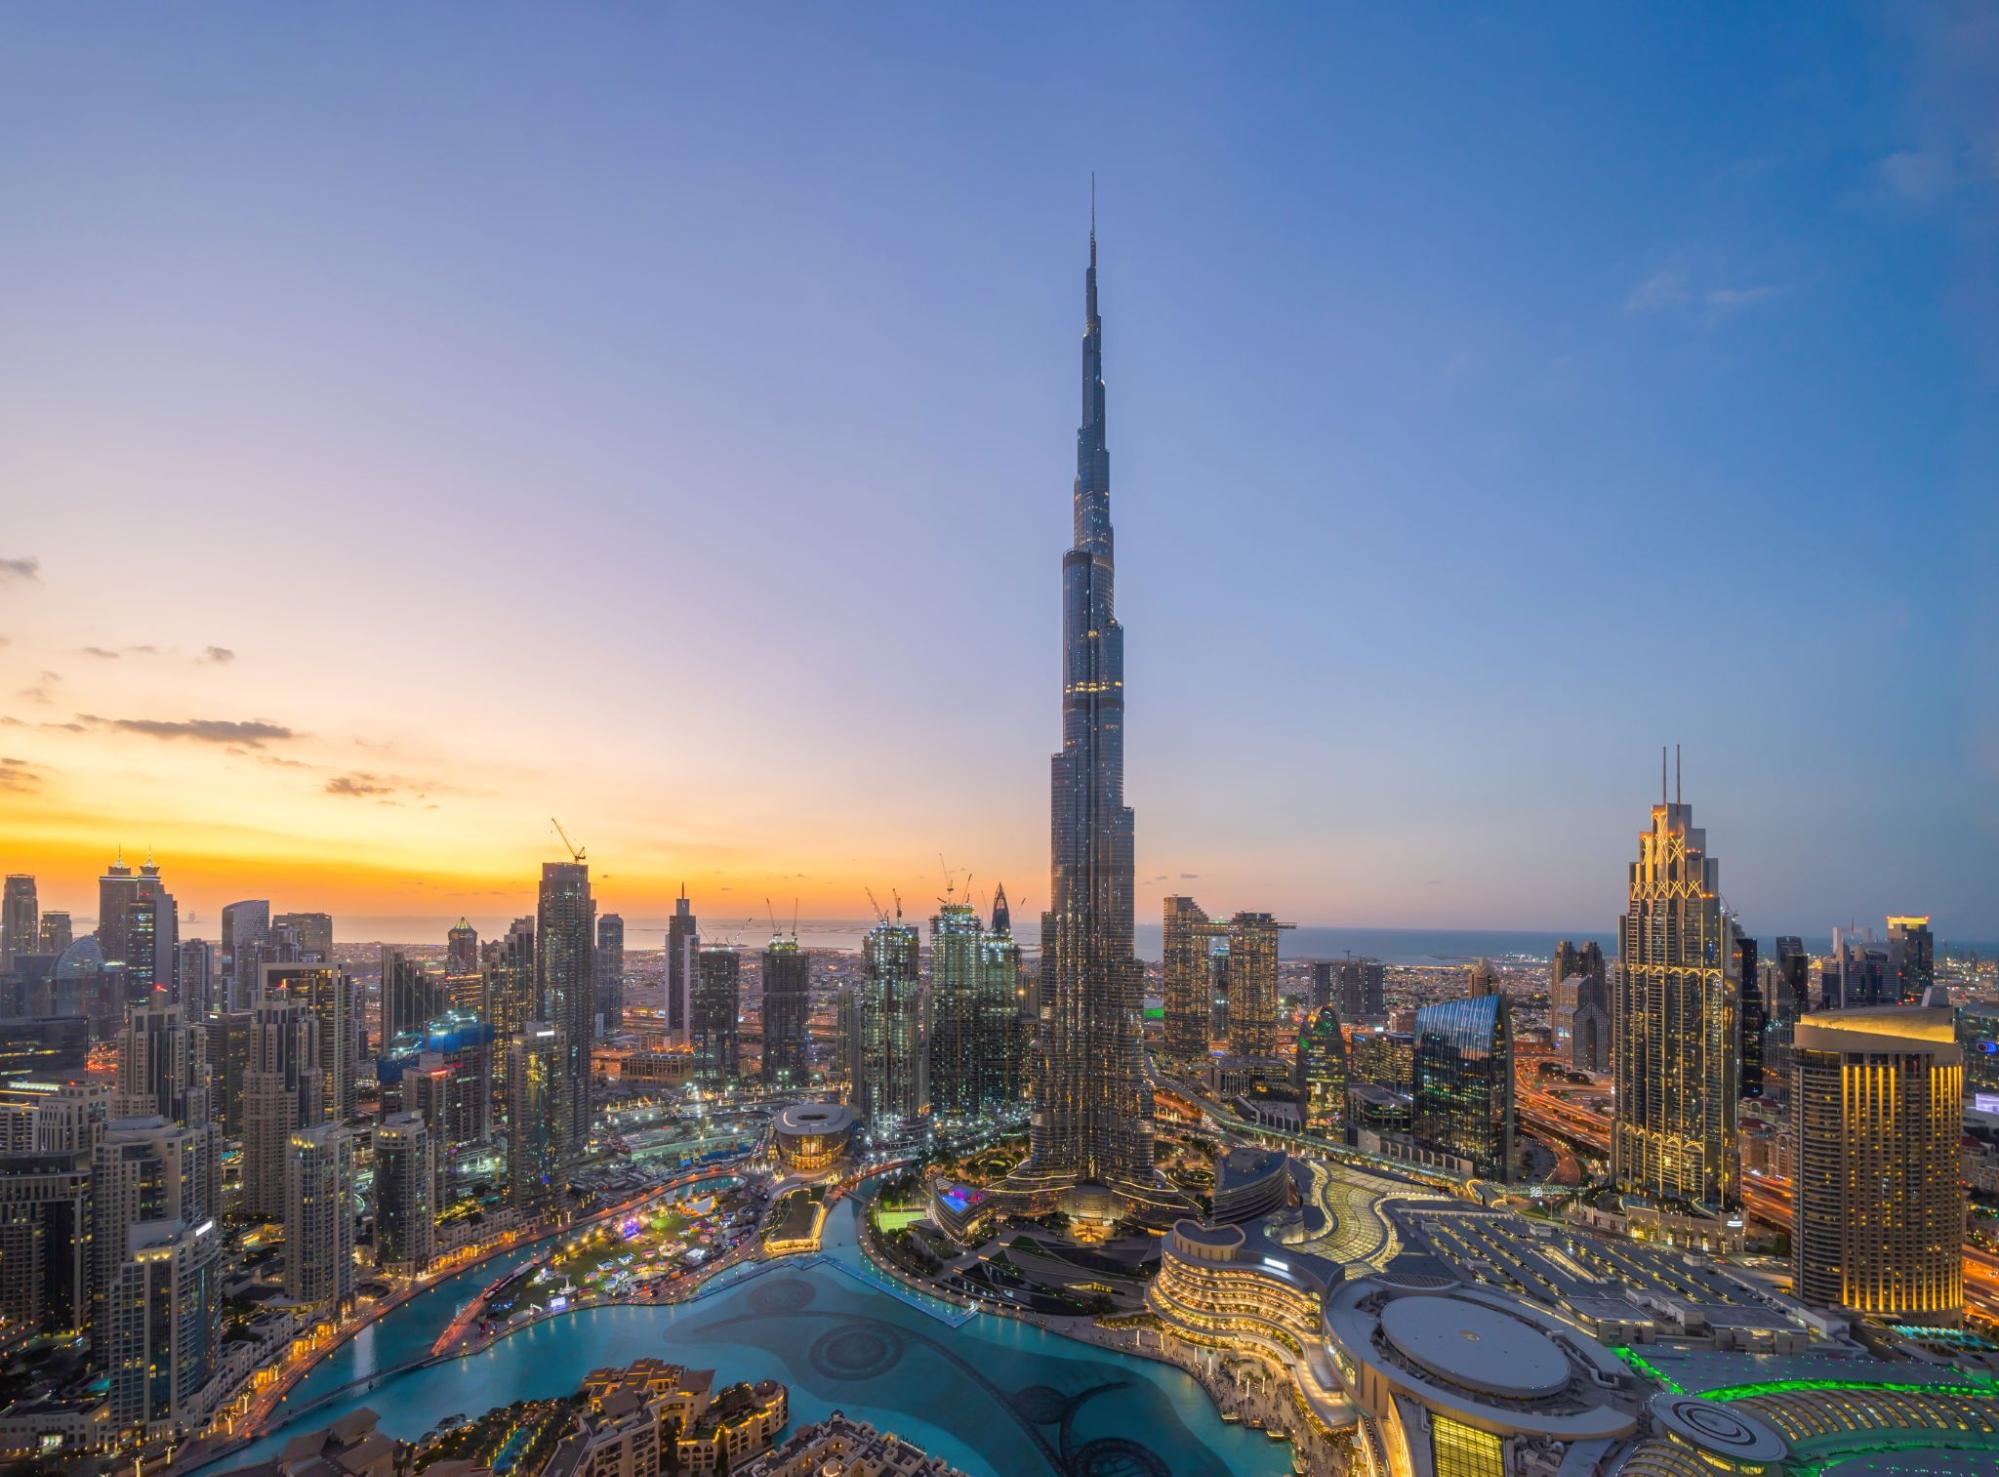 The Best Romantic Attractions in Dubai